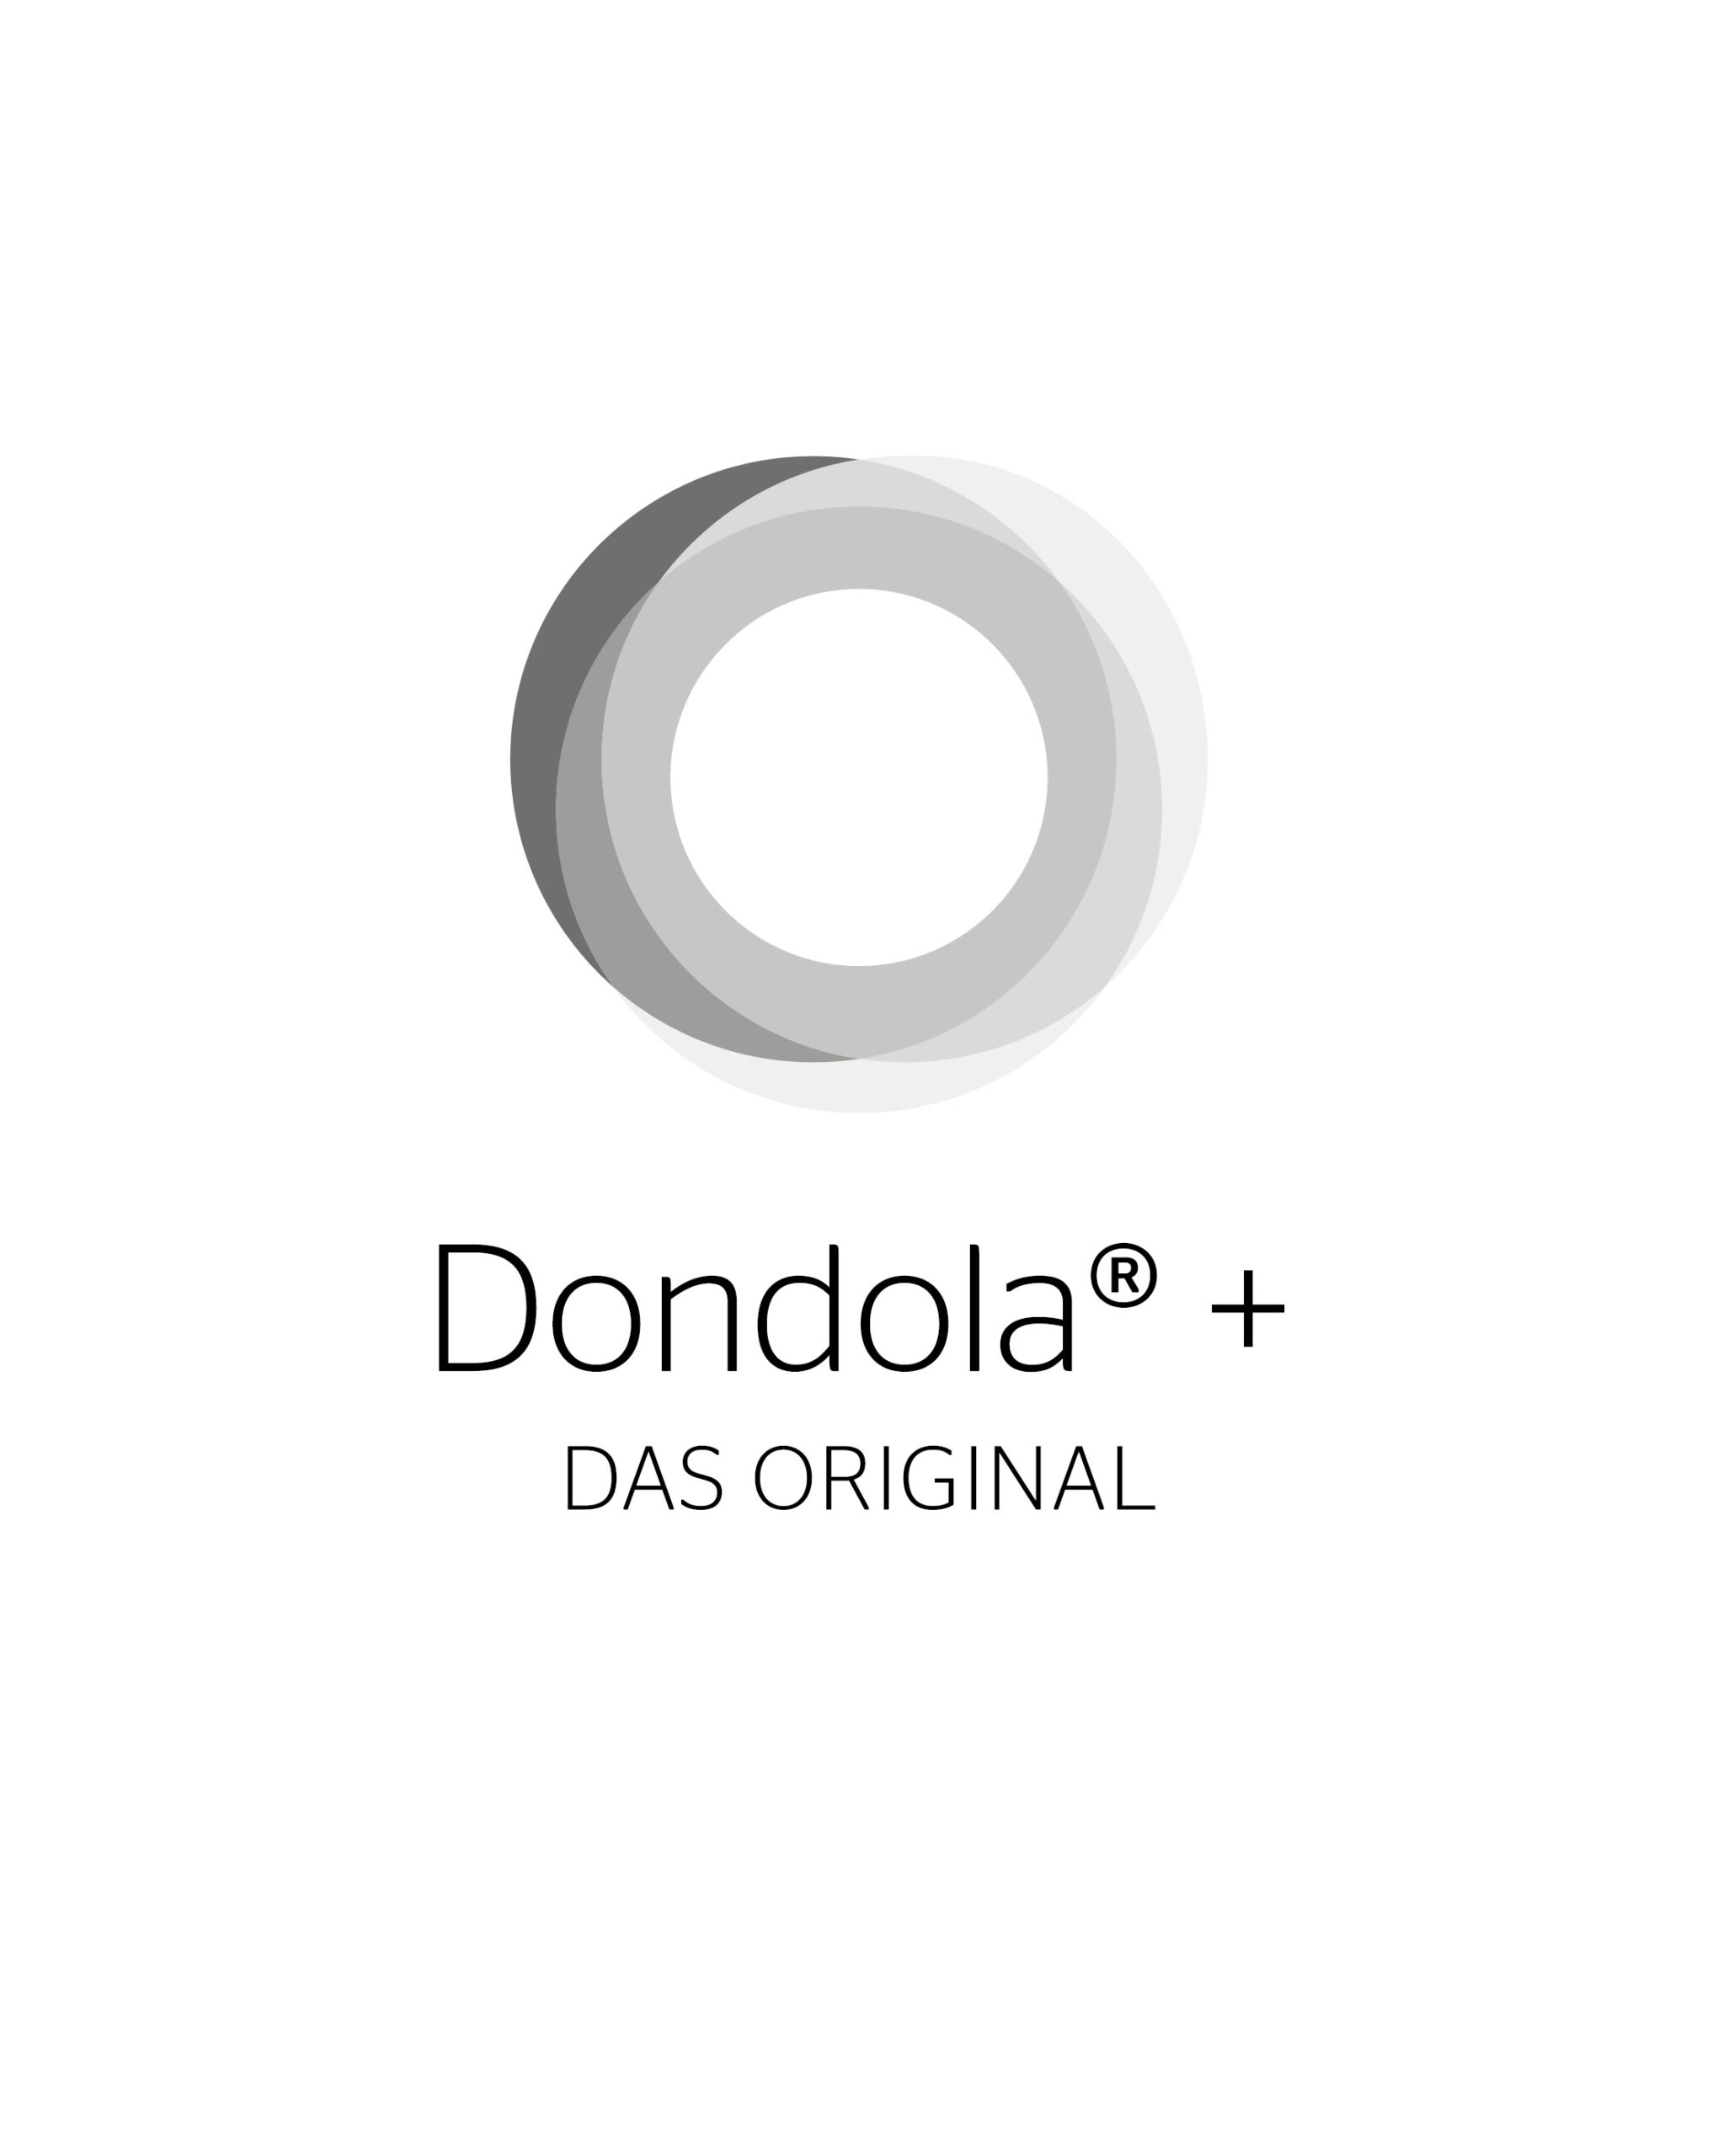 Dondola Air +